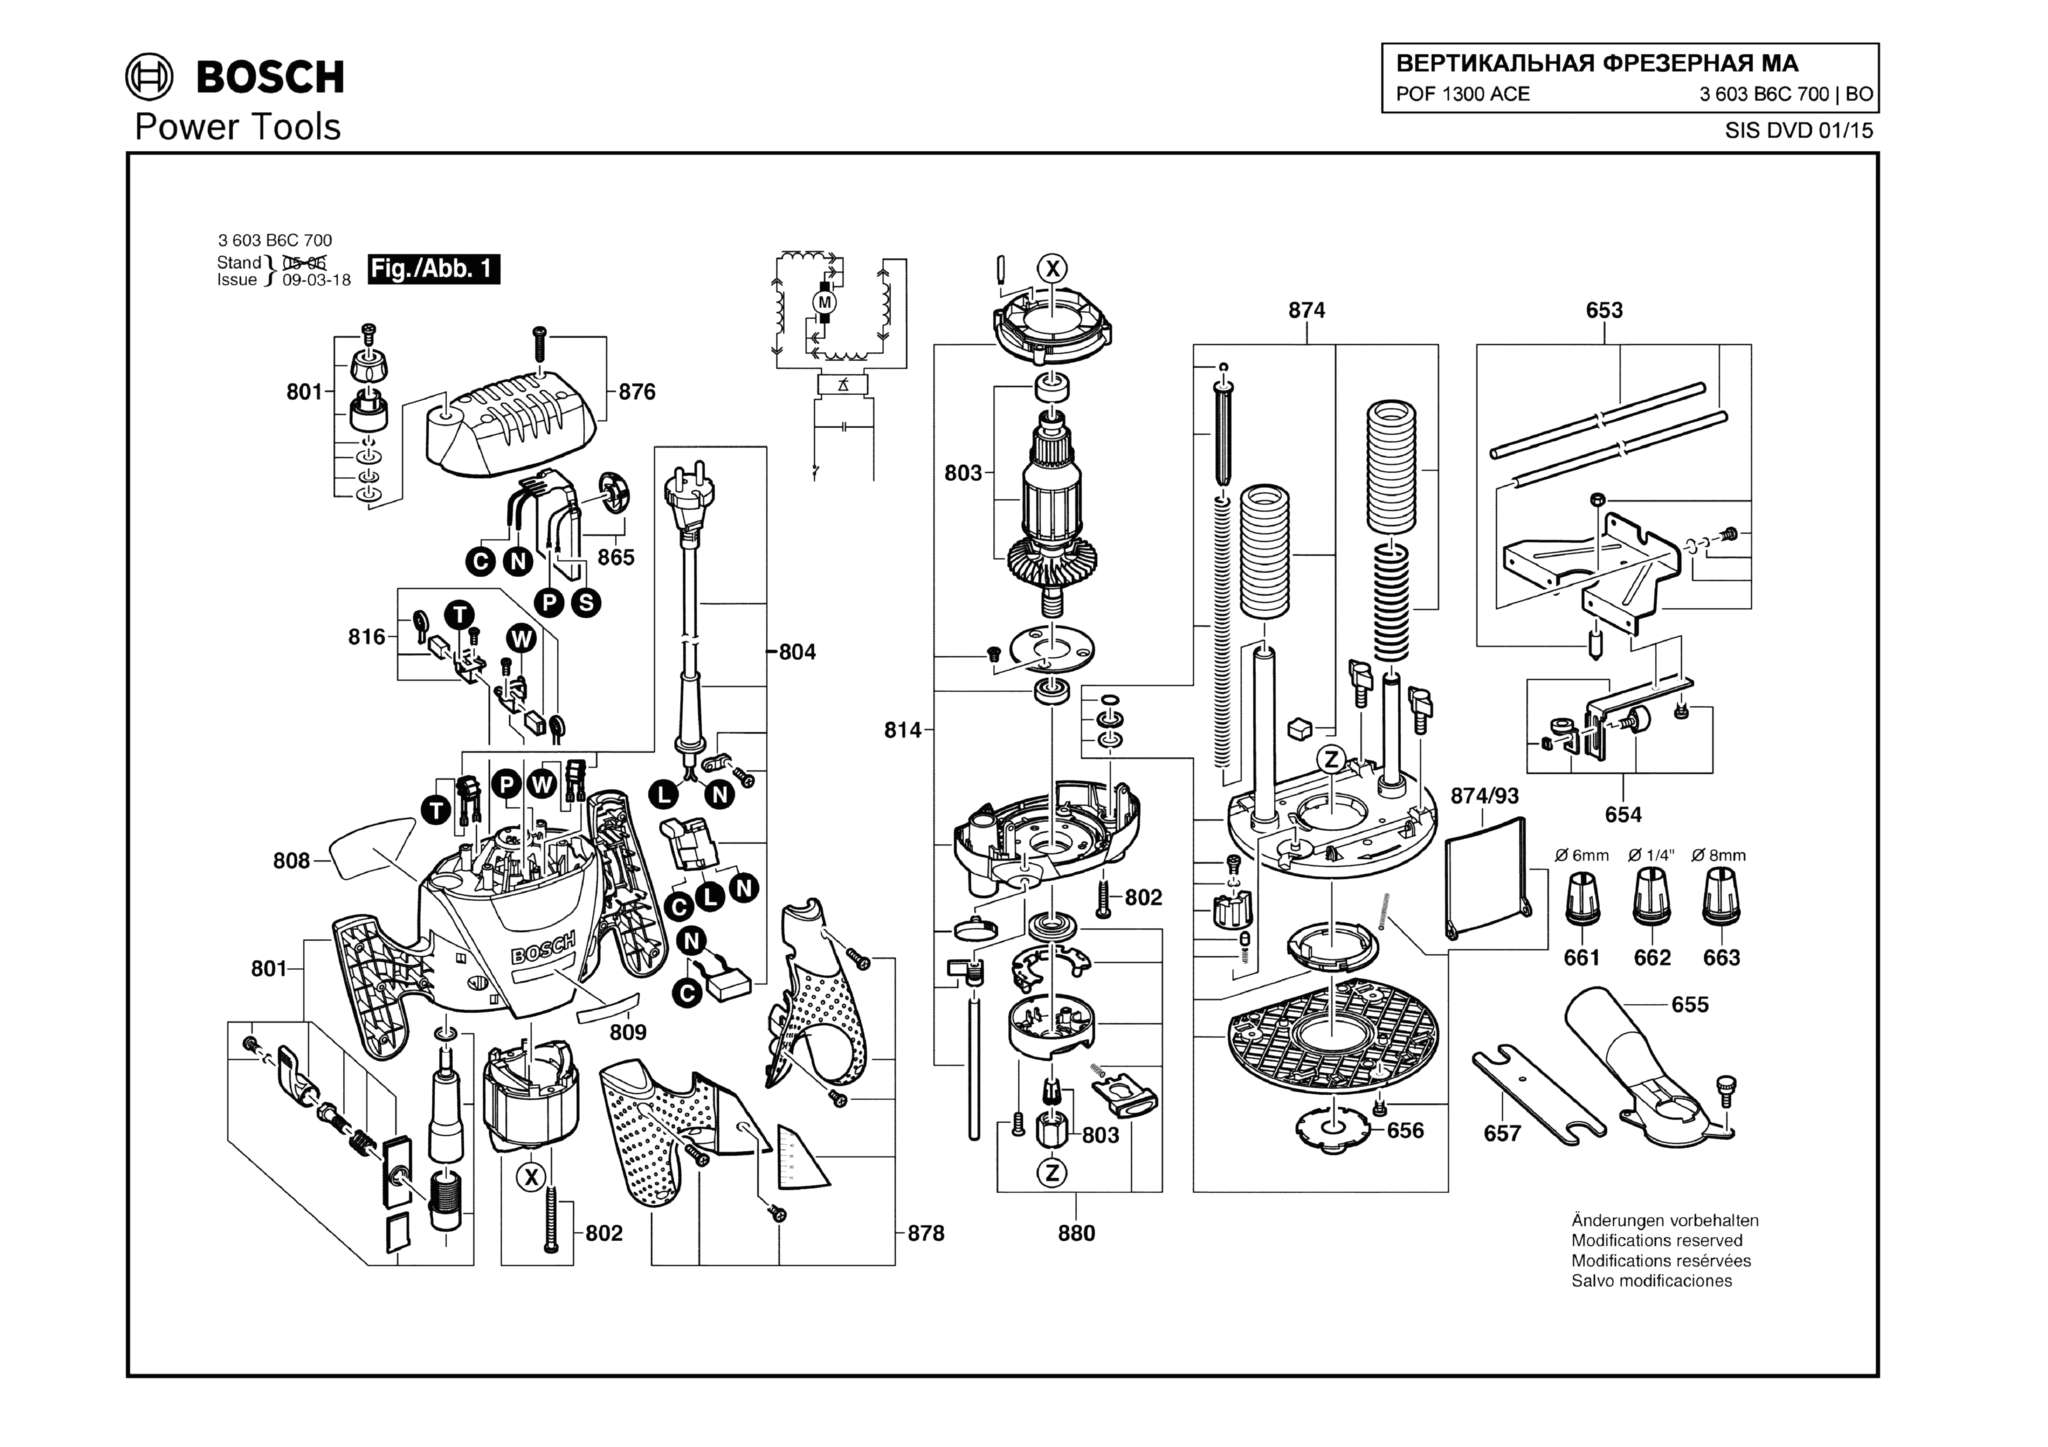 Запчасти, схема и деталировка Bosch POF 1300 ACE (ТИП 3603B6C700)